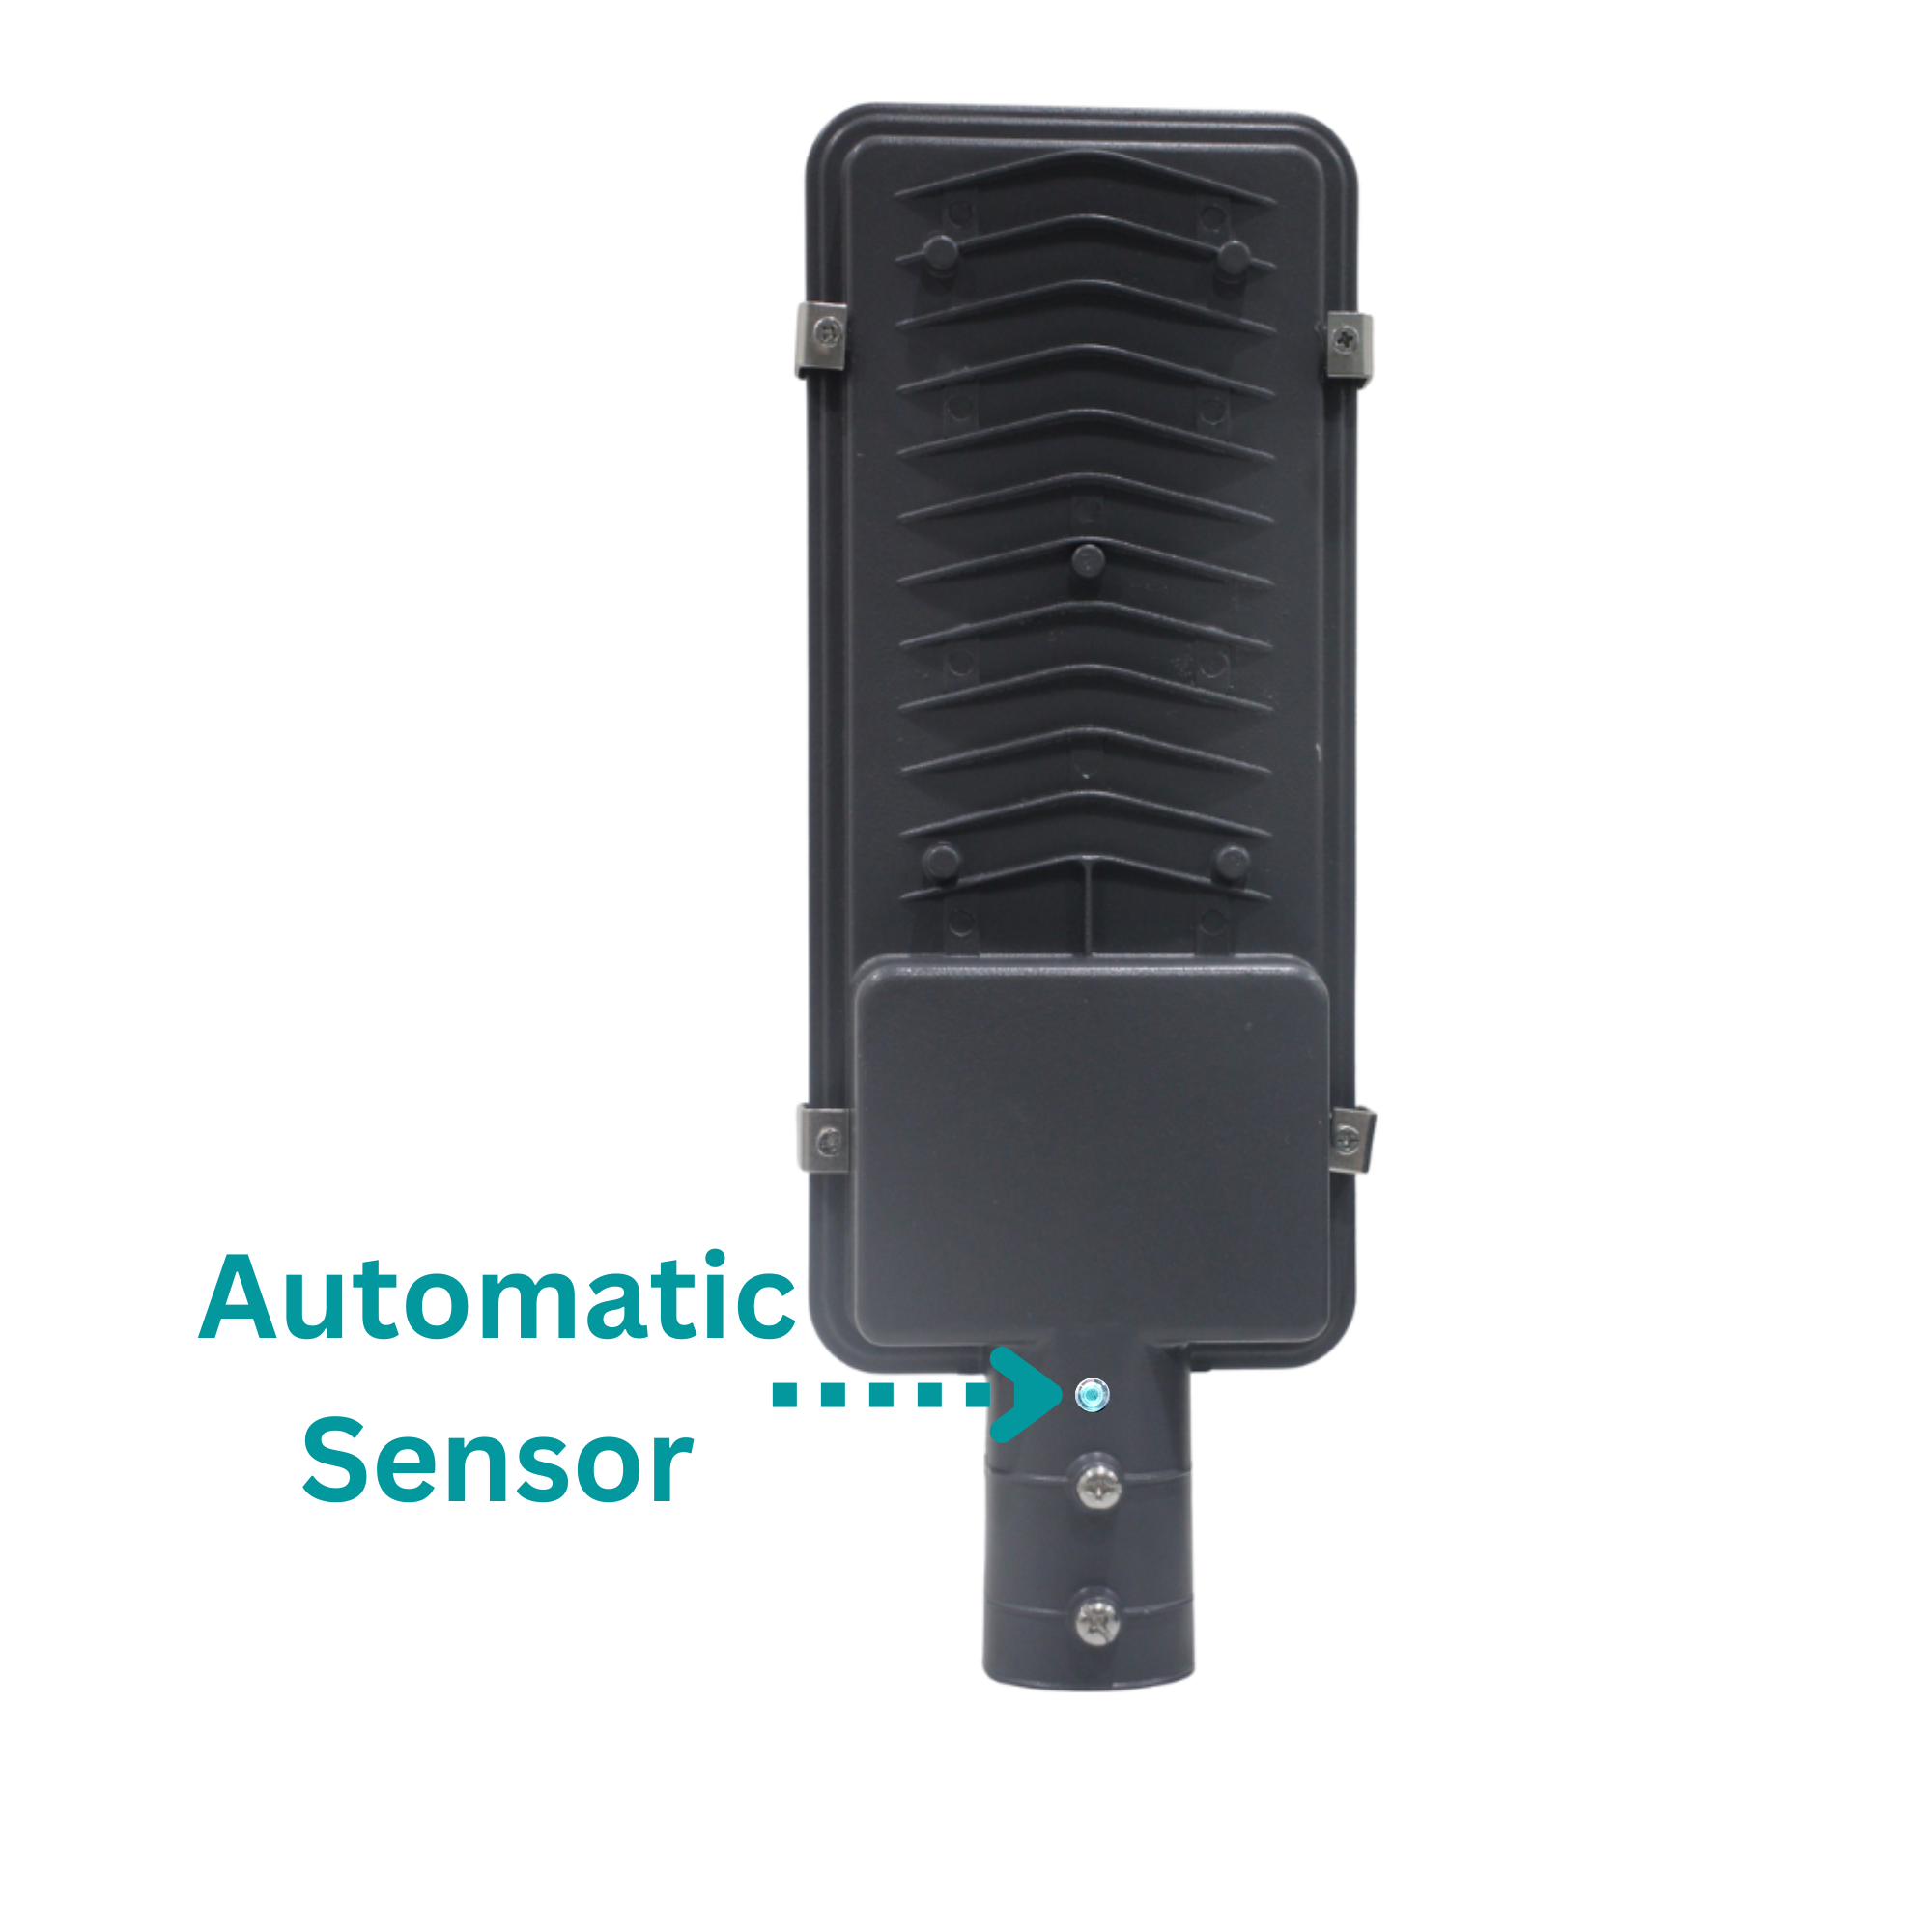 72 Watt Automatic Sensor System LED Street Light Waterproof IP65 For Outdoor Purposes